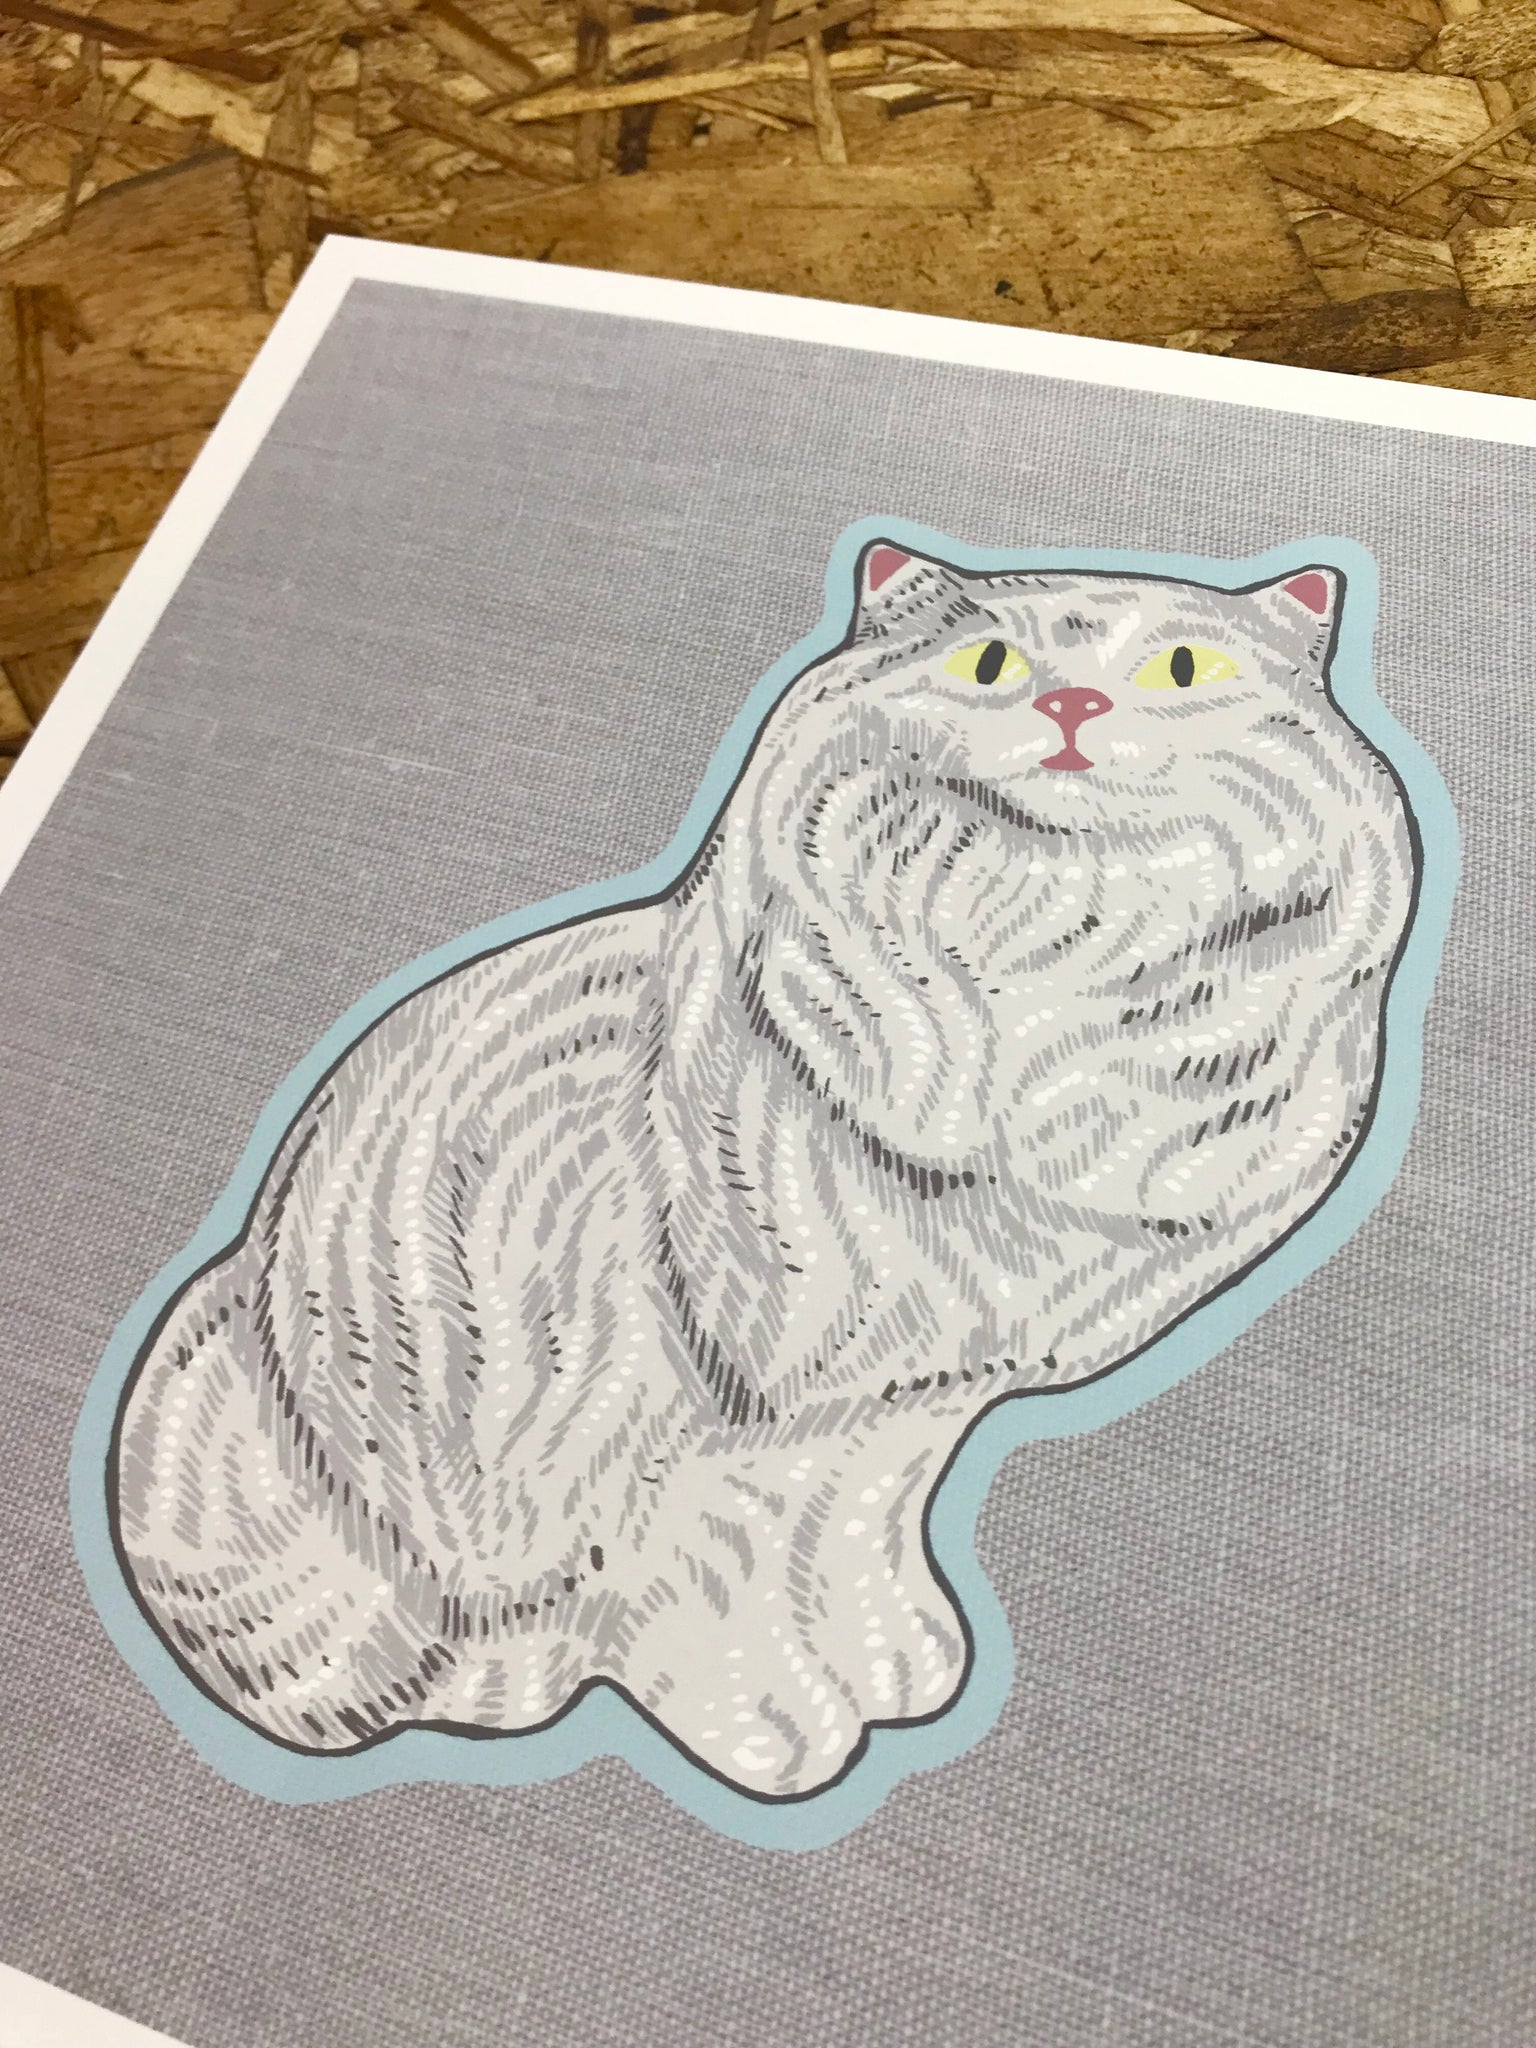 Ceramic Cat 8x8in Giclee Print